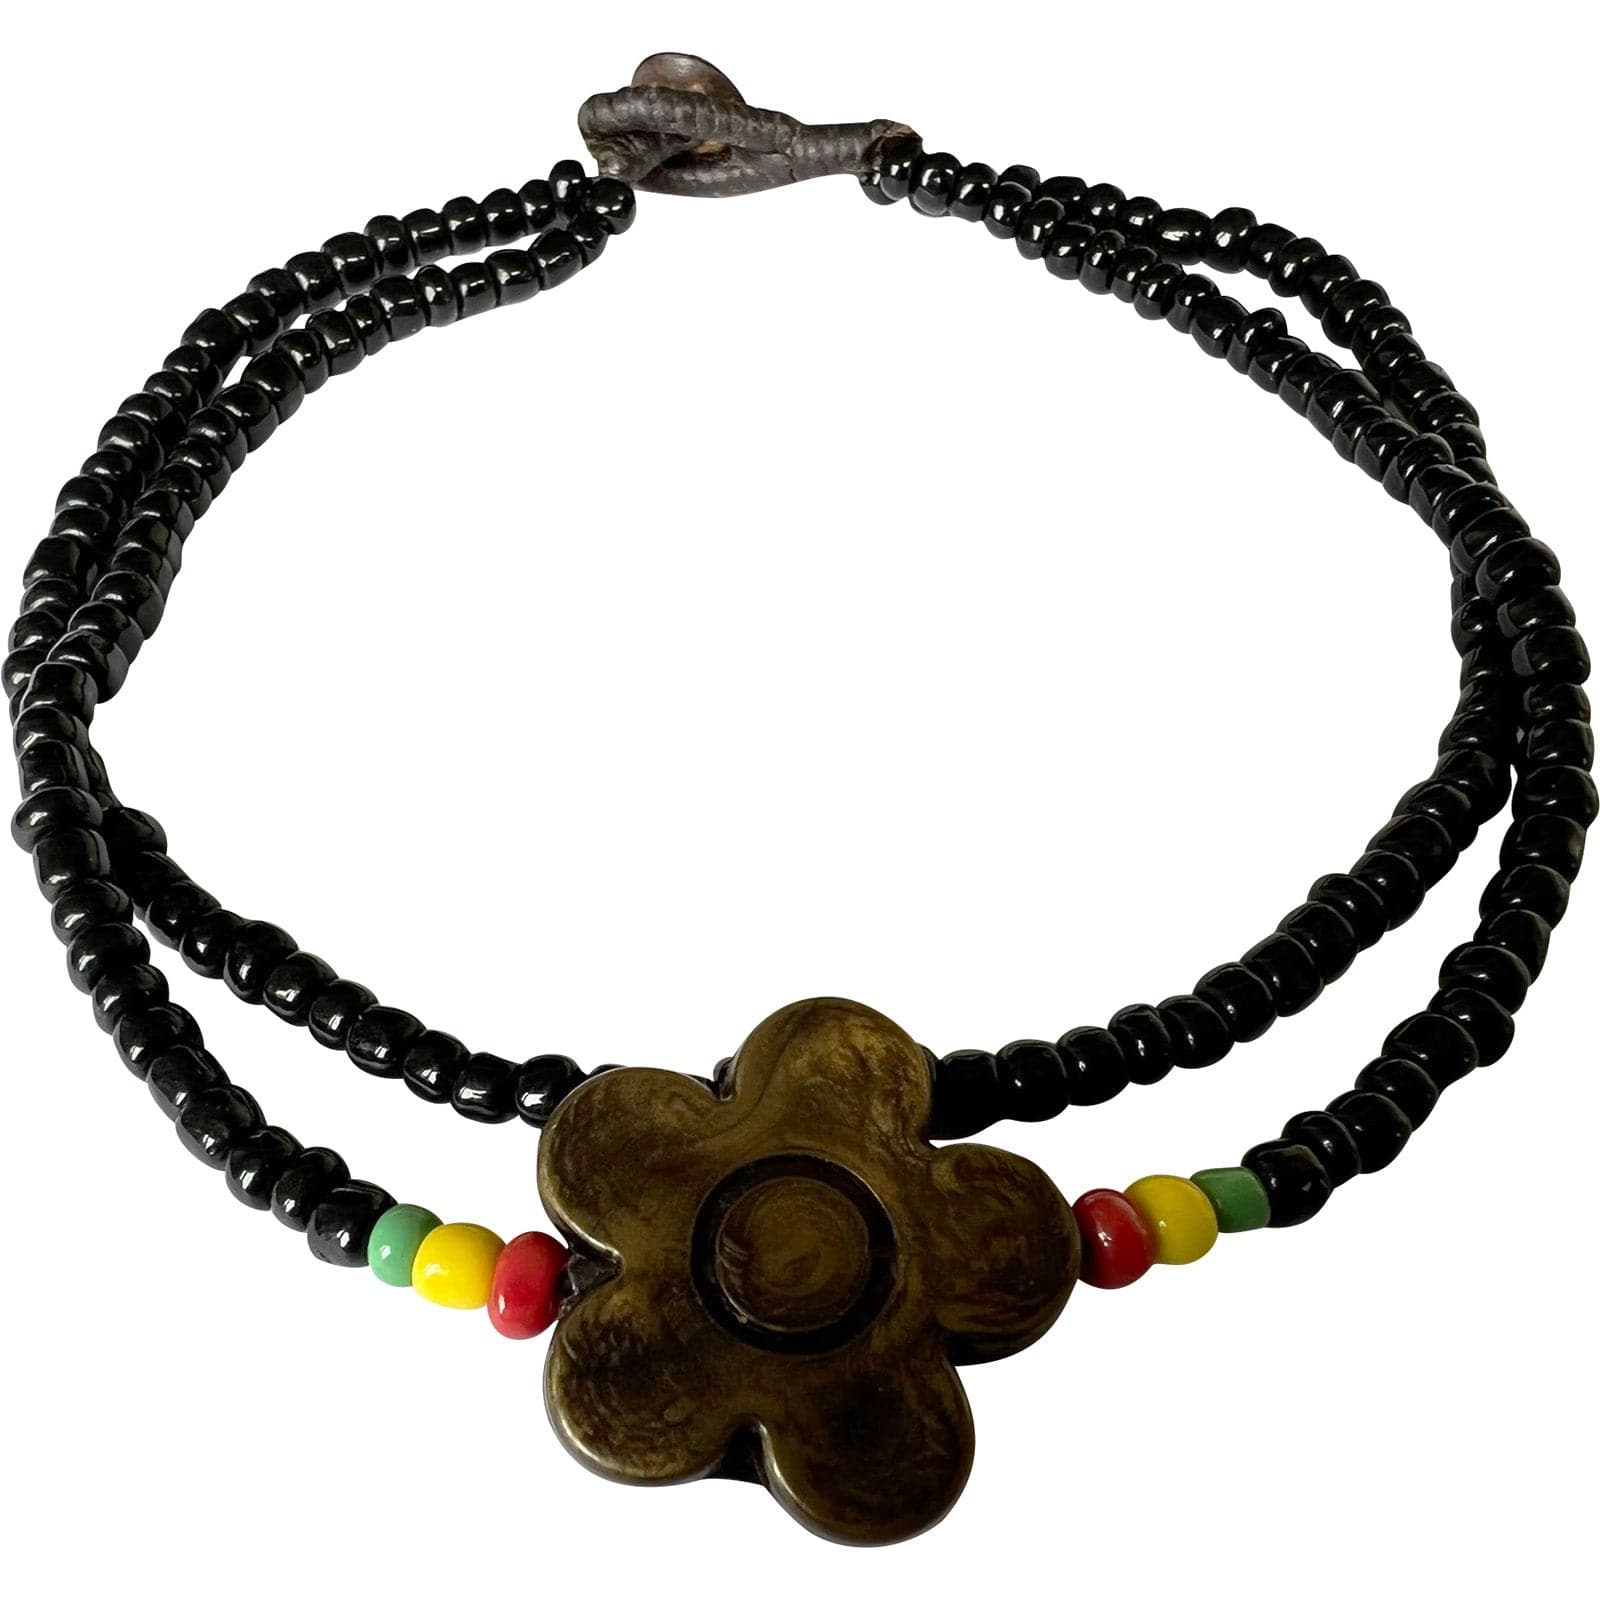 Black Flower Beads Anklet Foot Chain Ankle Bracelet Womens Girl Ladies Jewellery